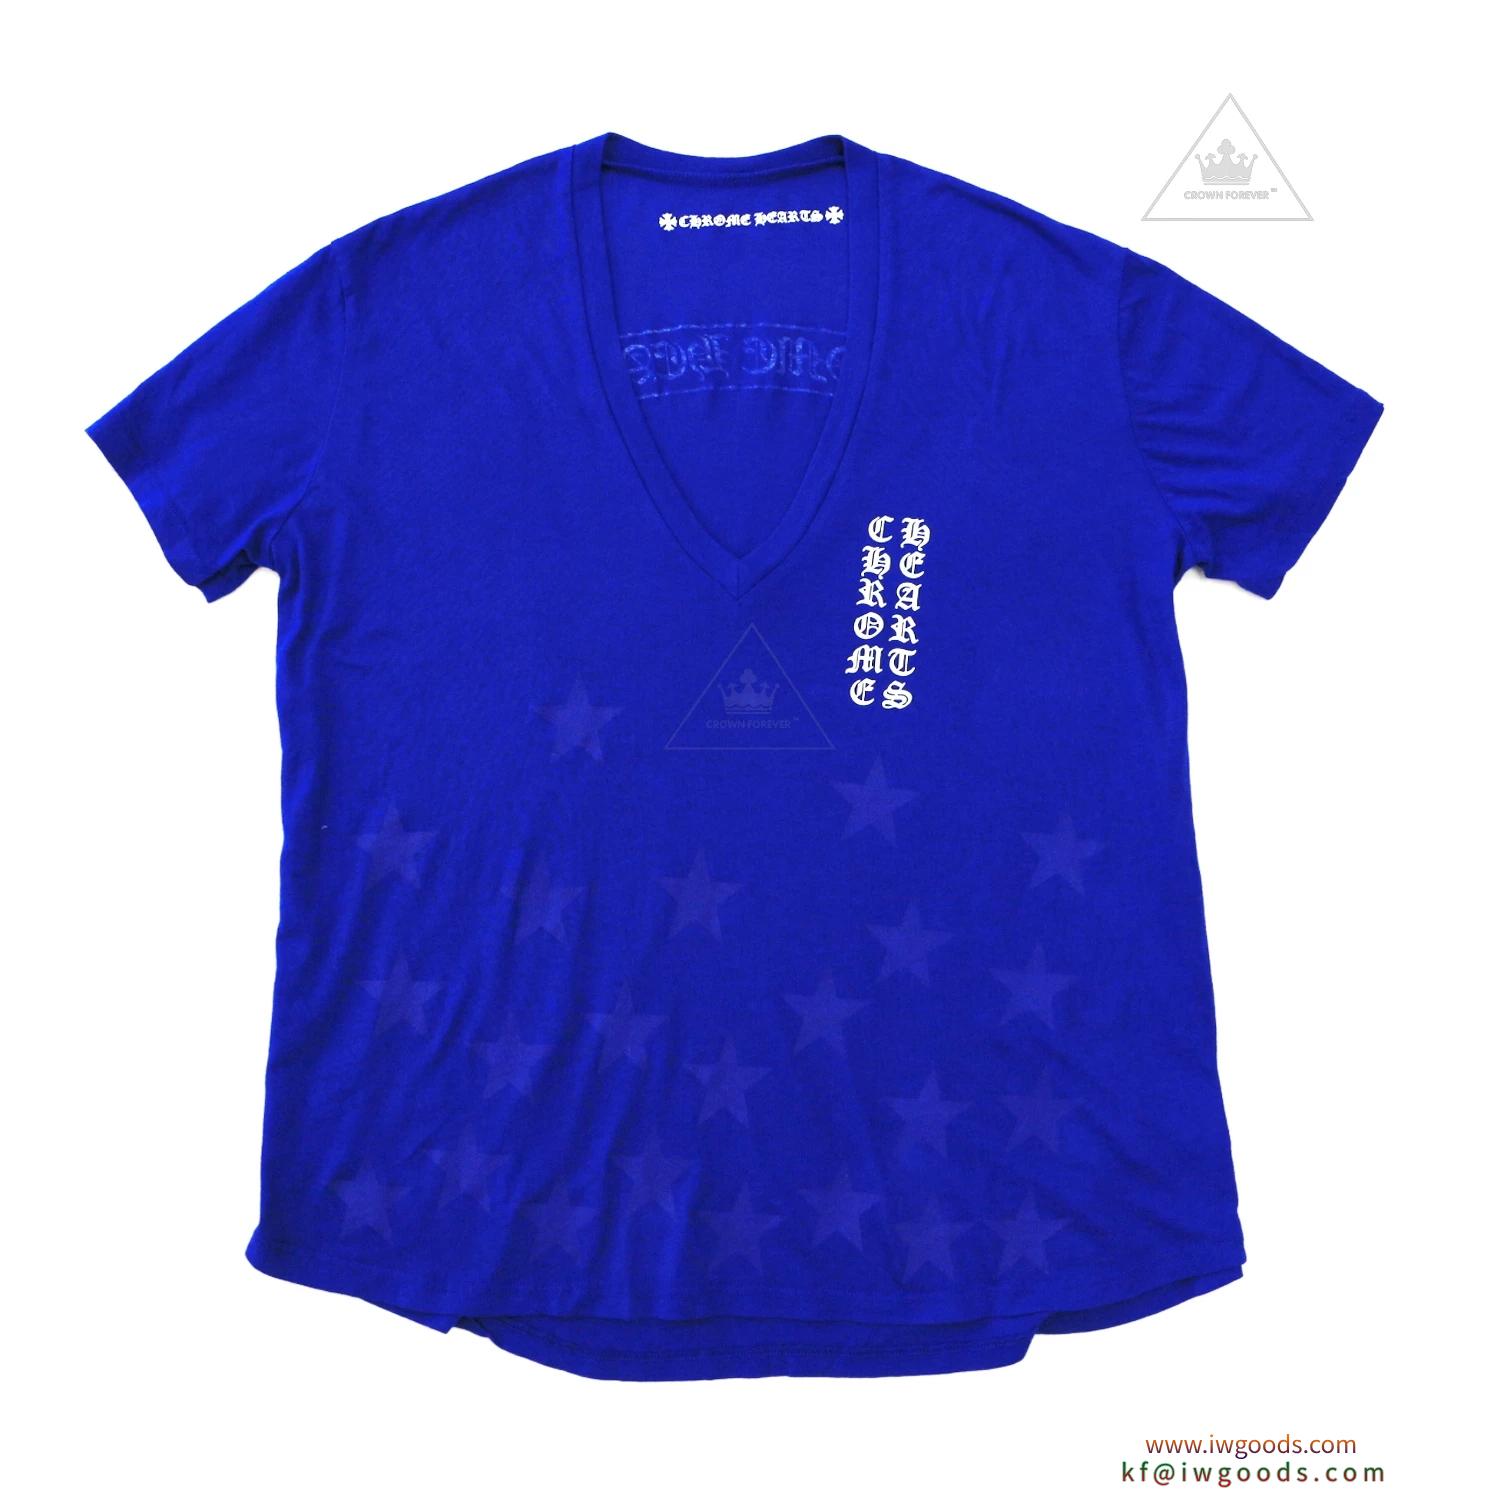 CHROME HEARTS 差をつけたい人にもおすすめ 半袖Tシャツ クロムハーツ 程よい最新作 iwgoods.com vCyyye-3